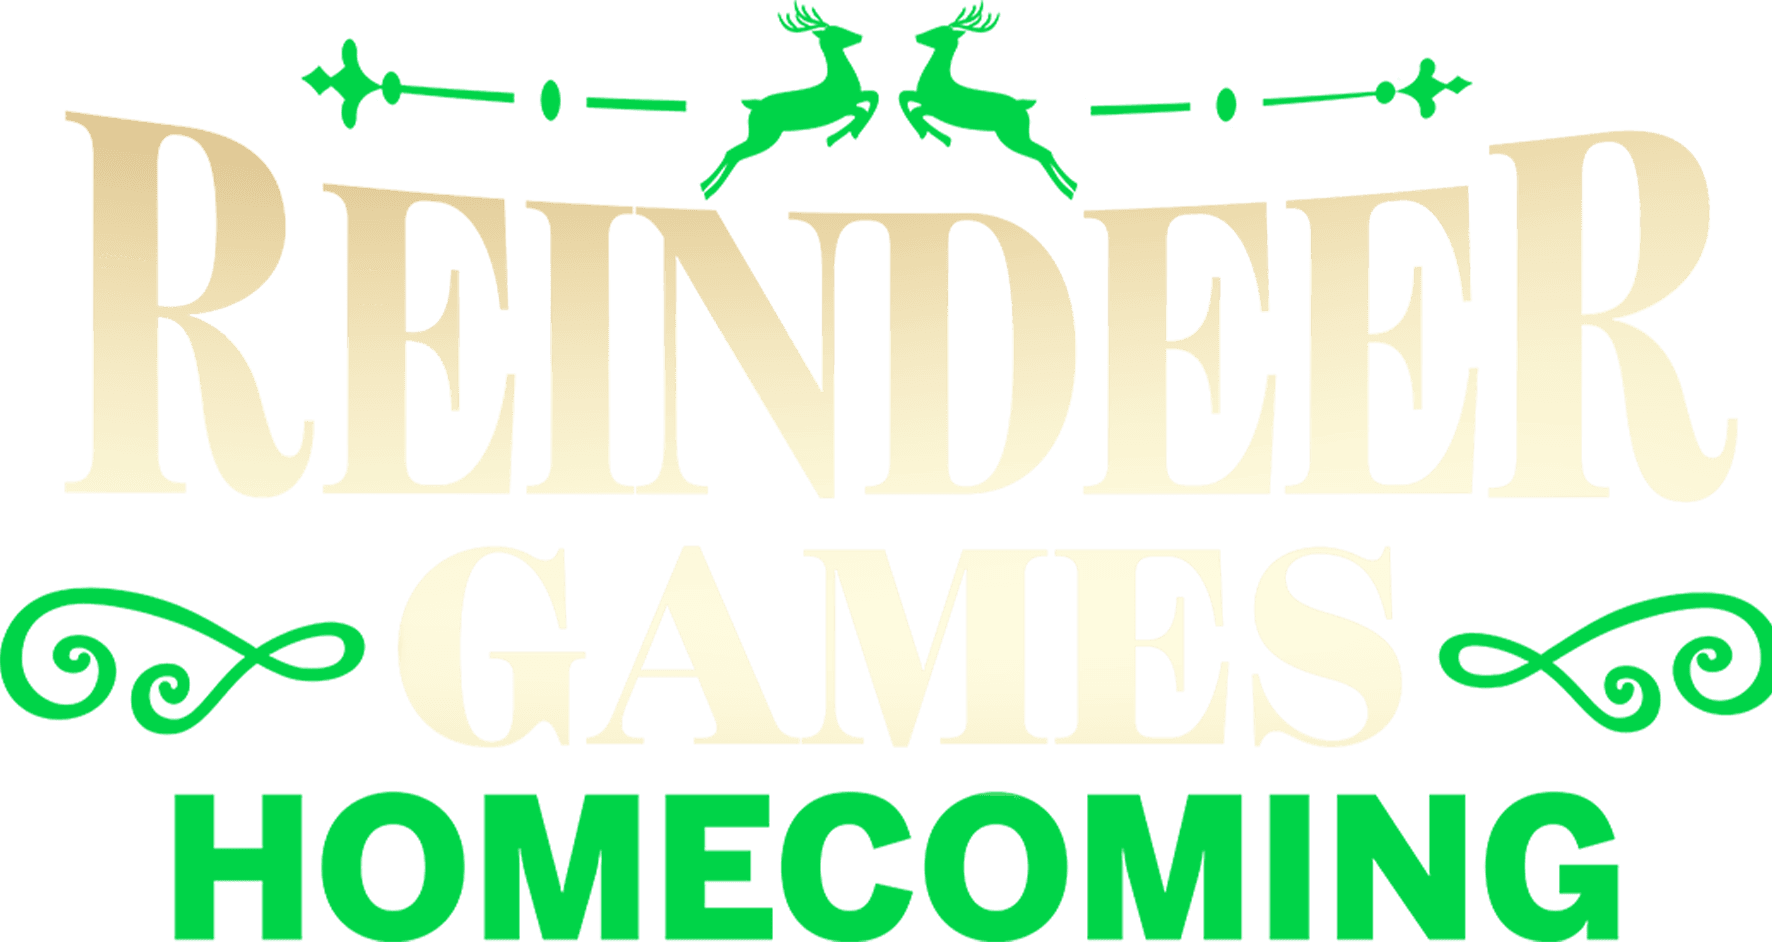 Reindeer Games Homecoming logo